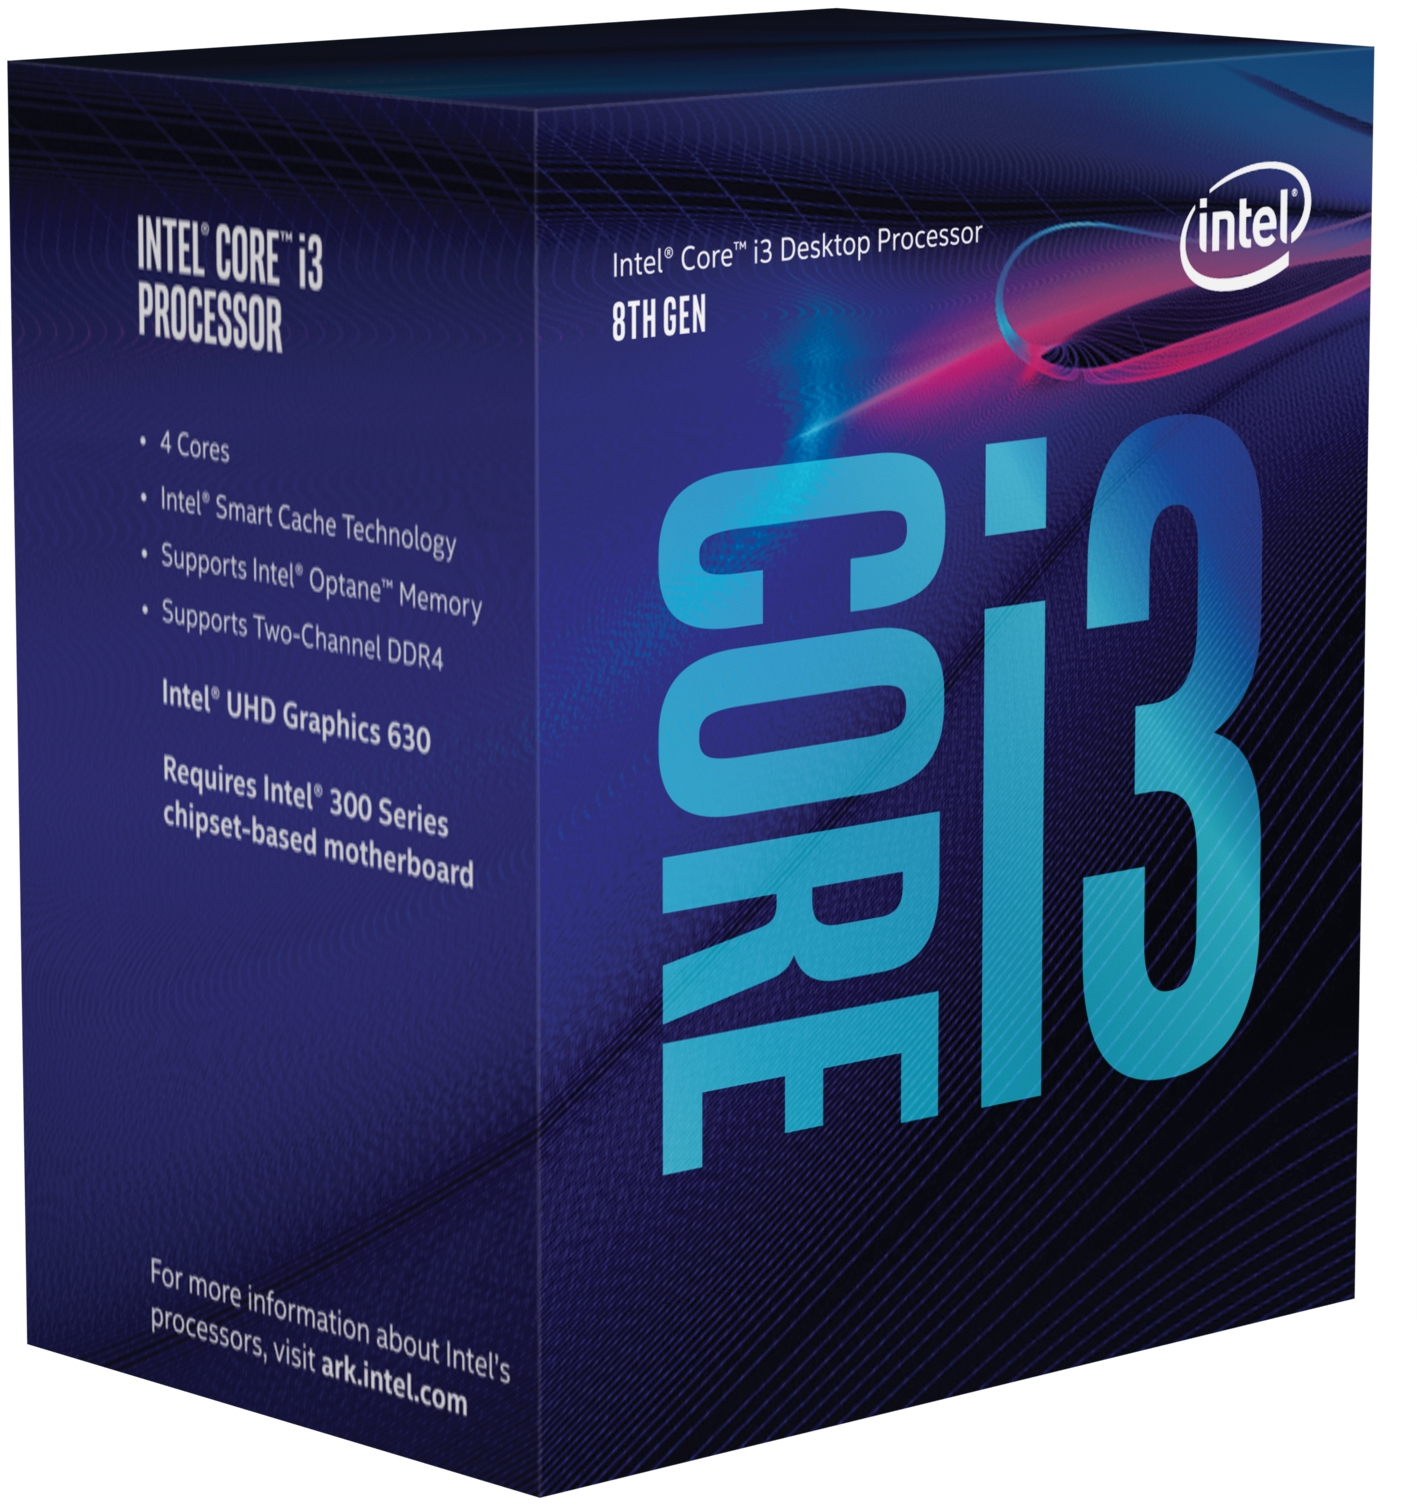 Intel core i3-8100